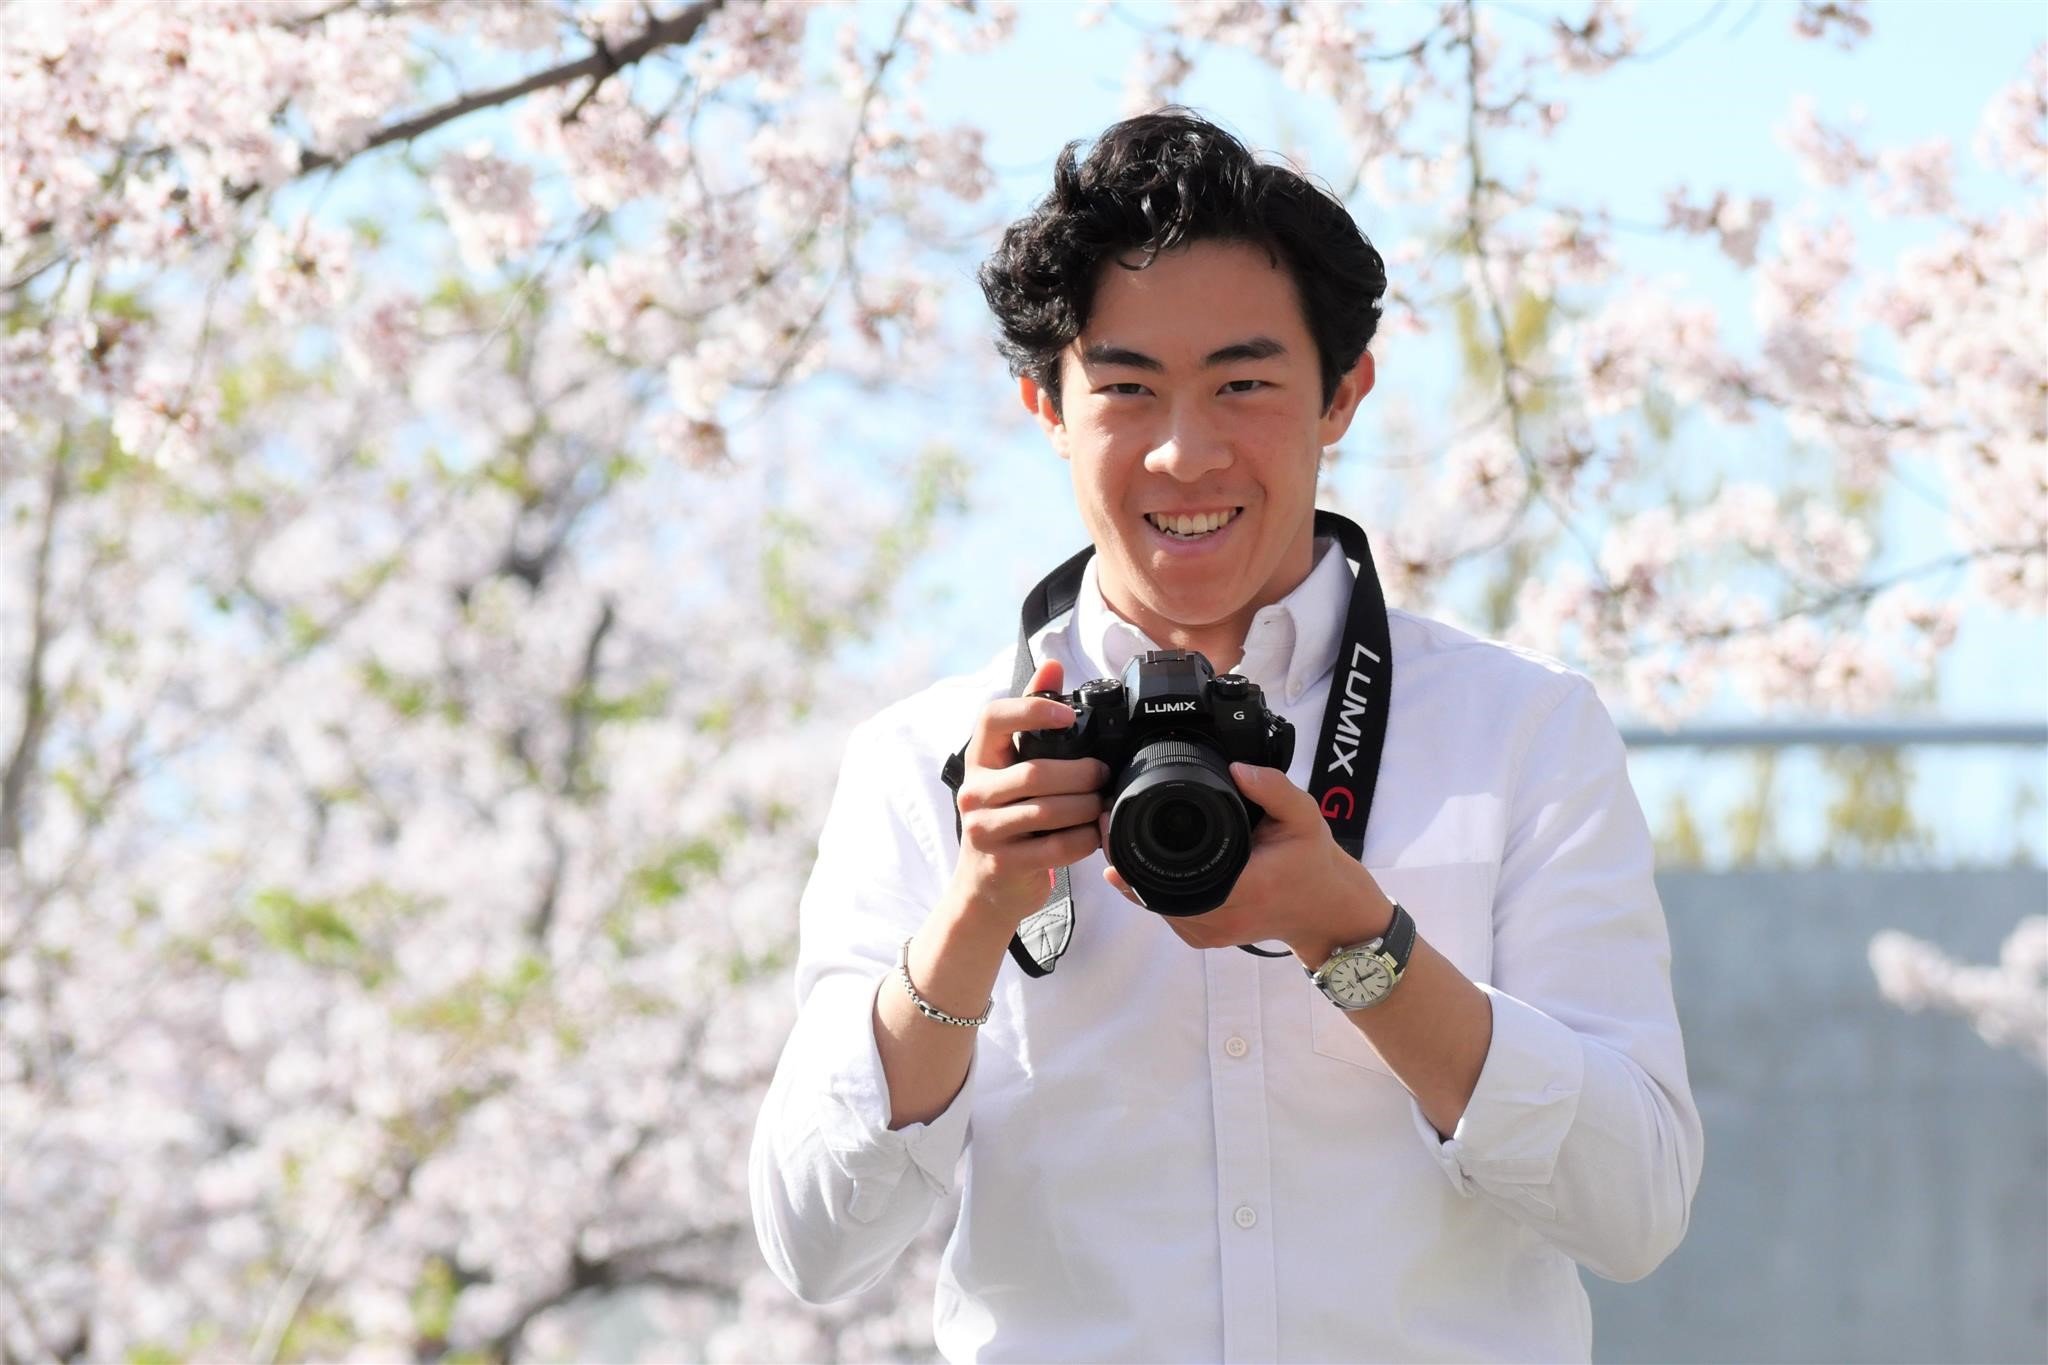 Photo: Nathan Chen holding a camera